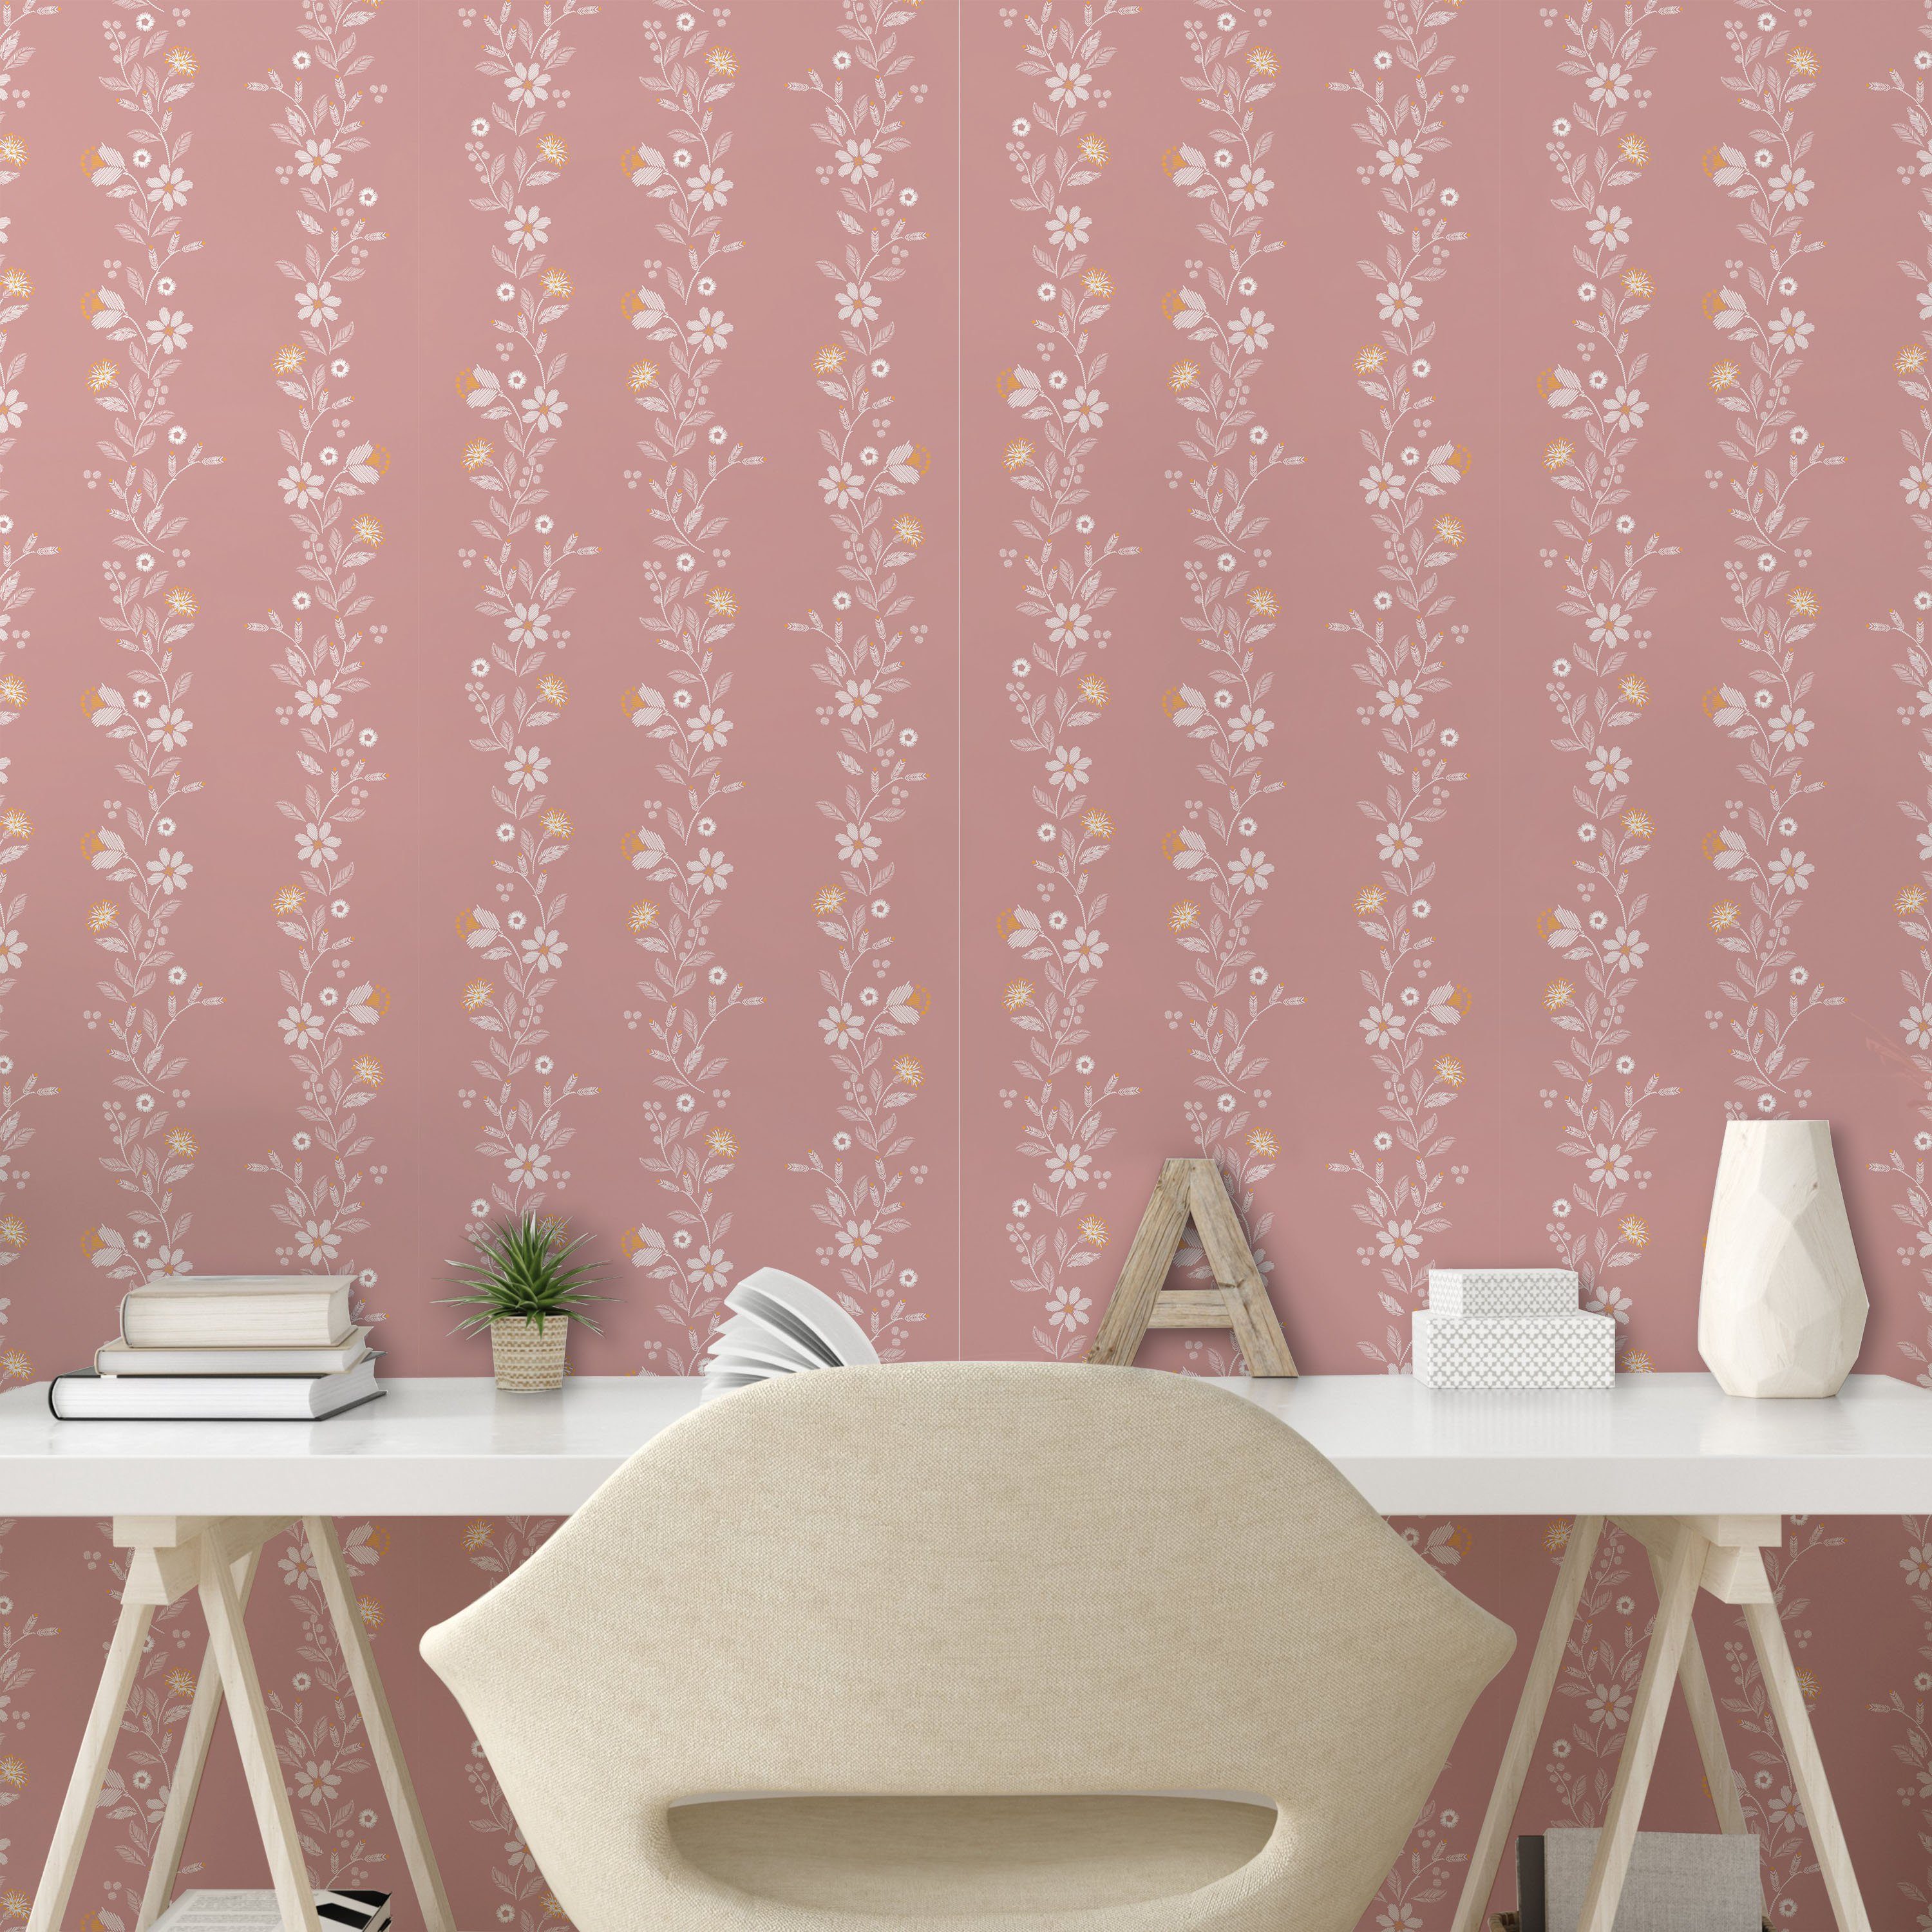 Abakuhaus Vinyltapete selbstklebendes Wohnzimmer Pastell Küchenakzent, neutrale Farbe Floral Retro